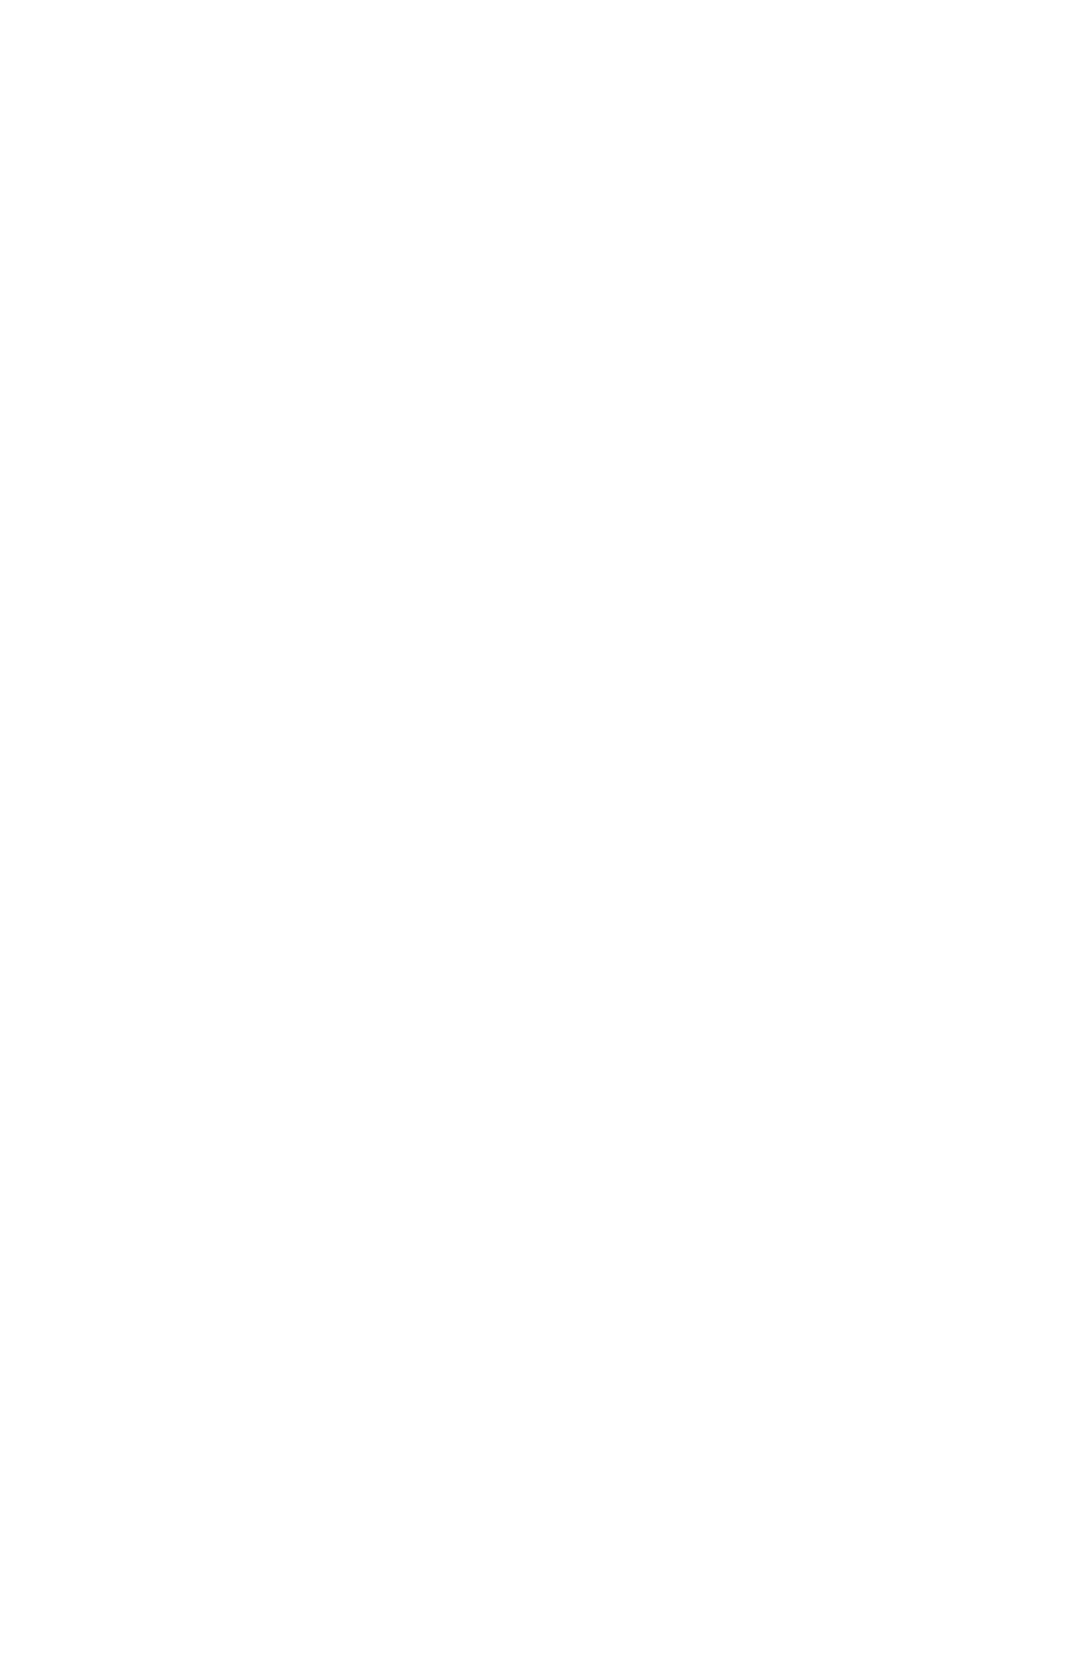 Sartorius logo for dark backgrounds (transparent PNG)